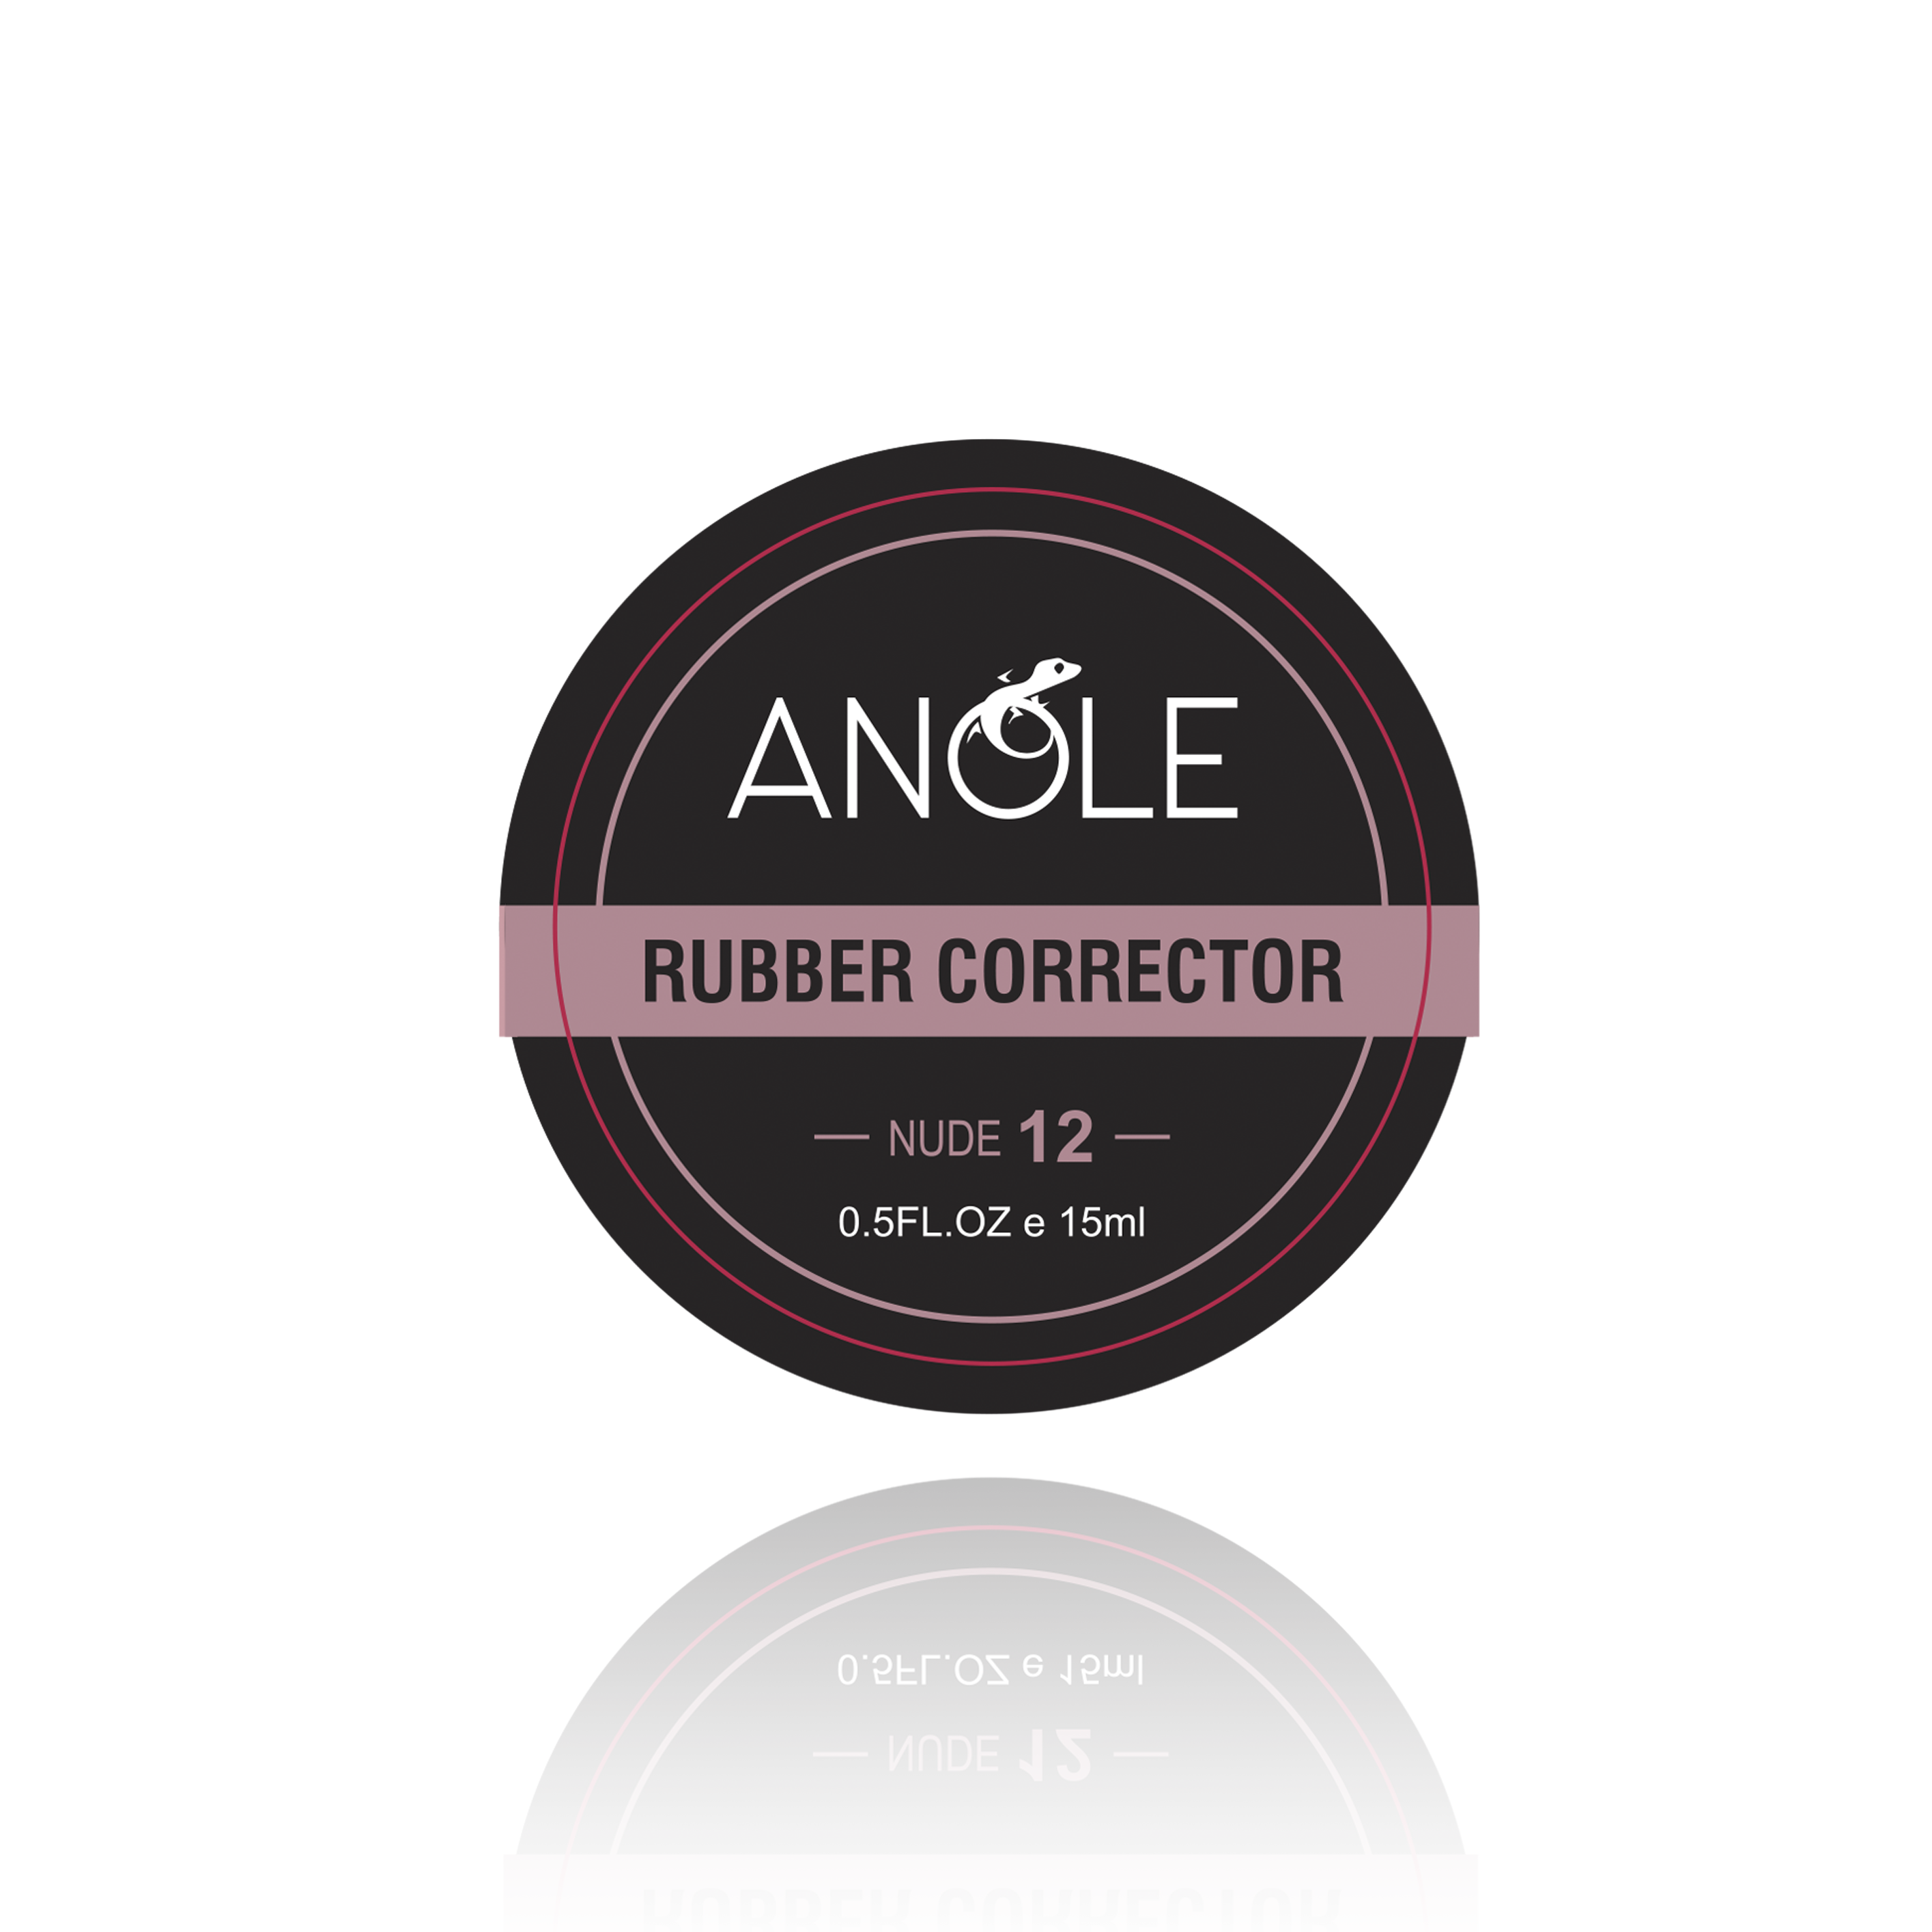 anole rubber corrector nude 12